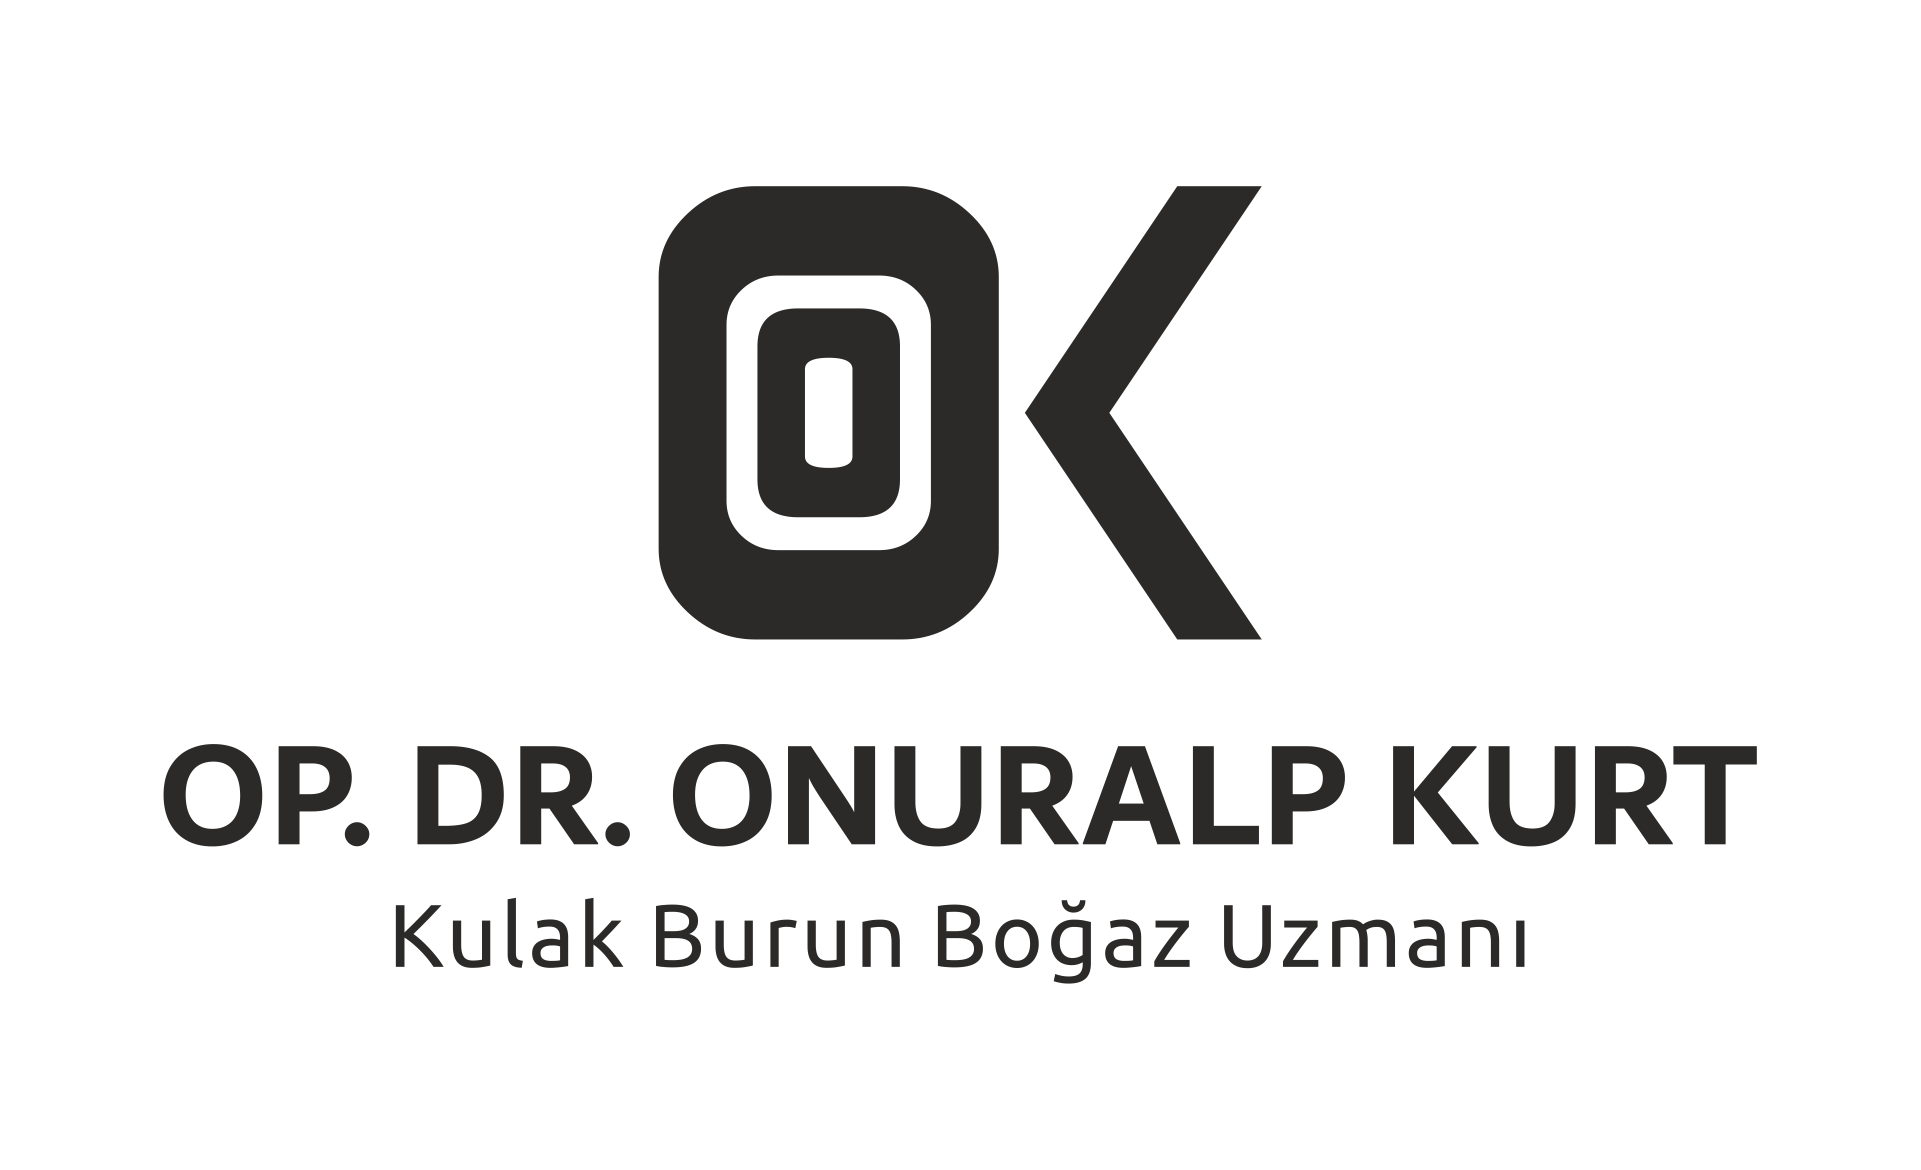 Otorhinolaryngologist | Op. Dr. Onuralp Kurt